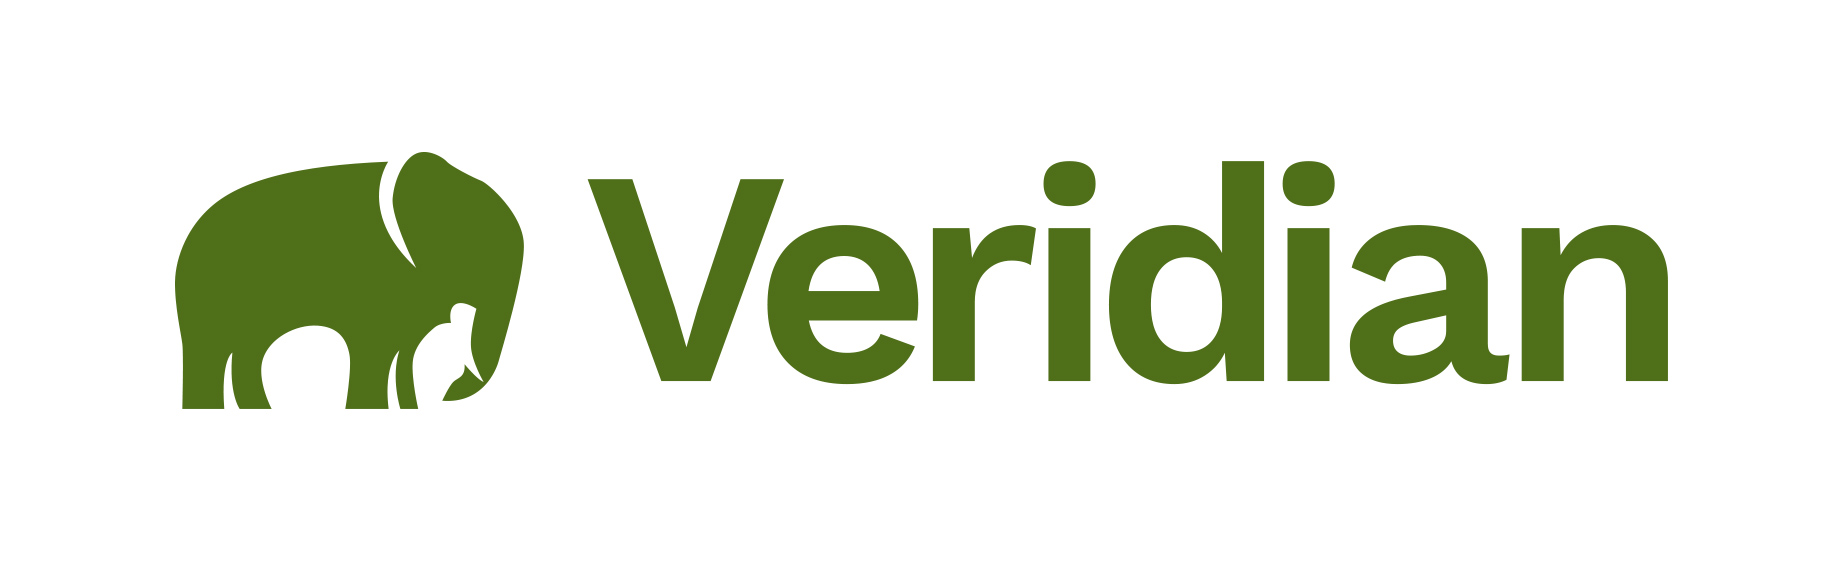 veridian software logo